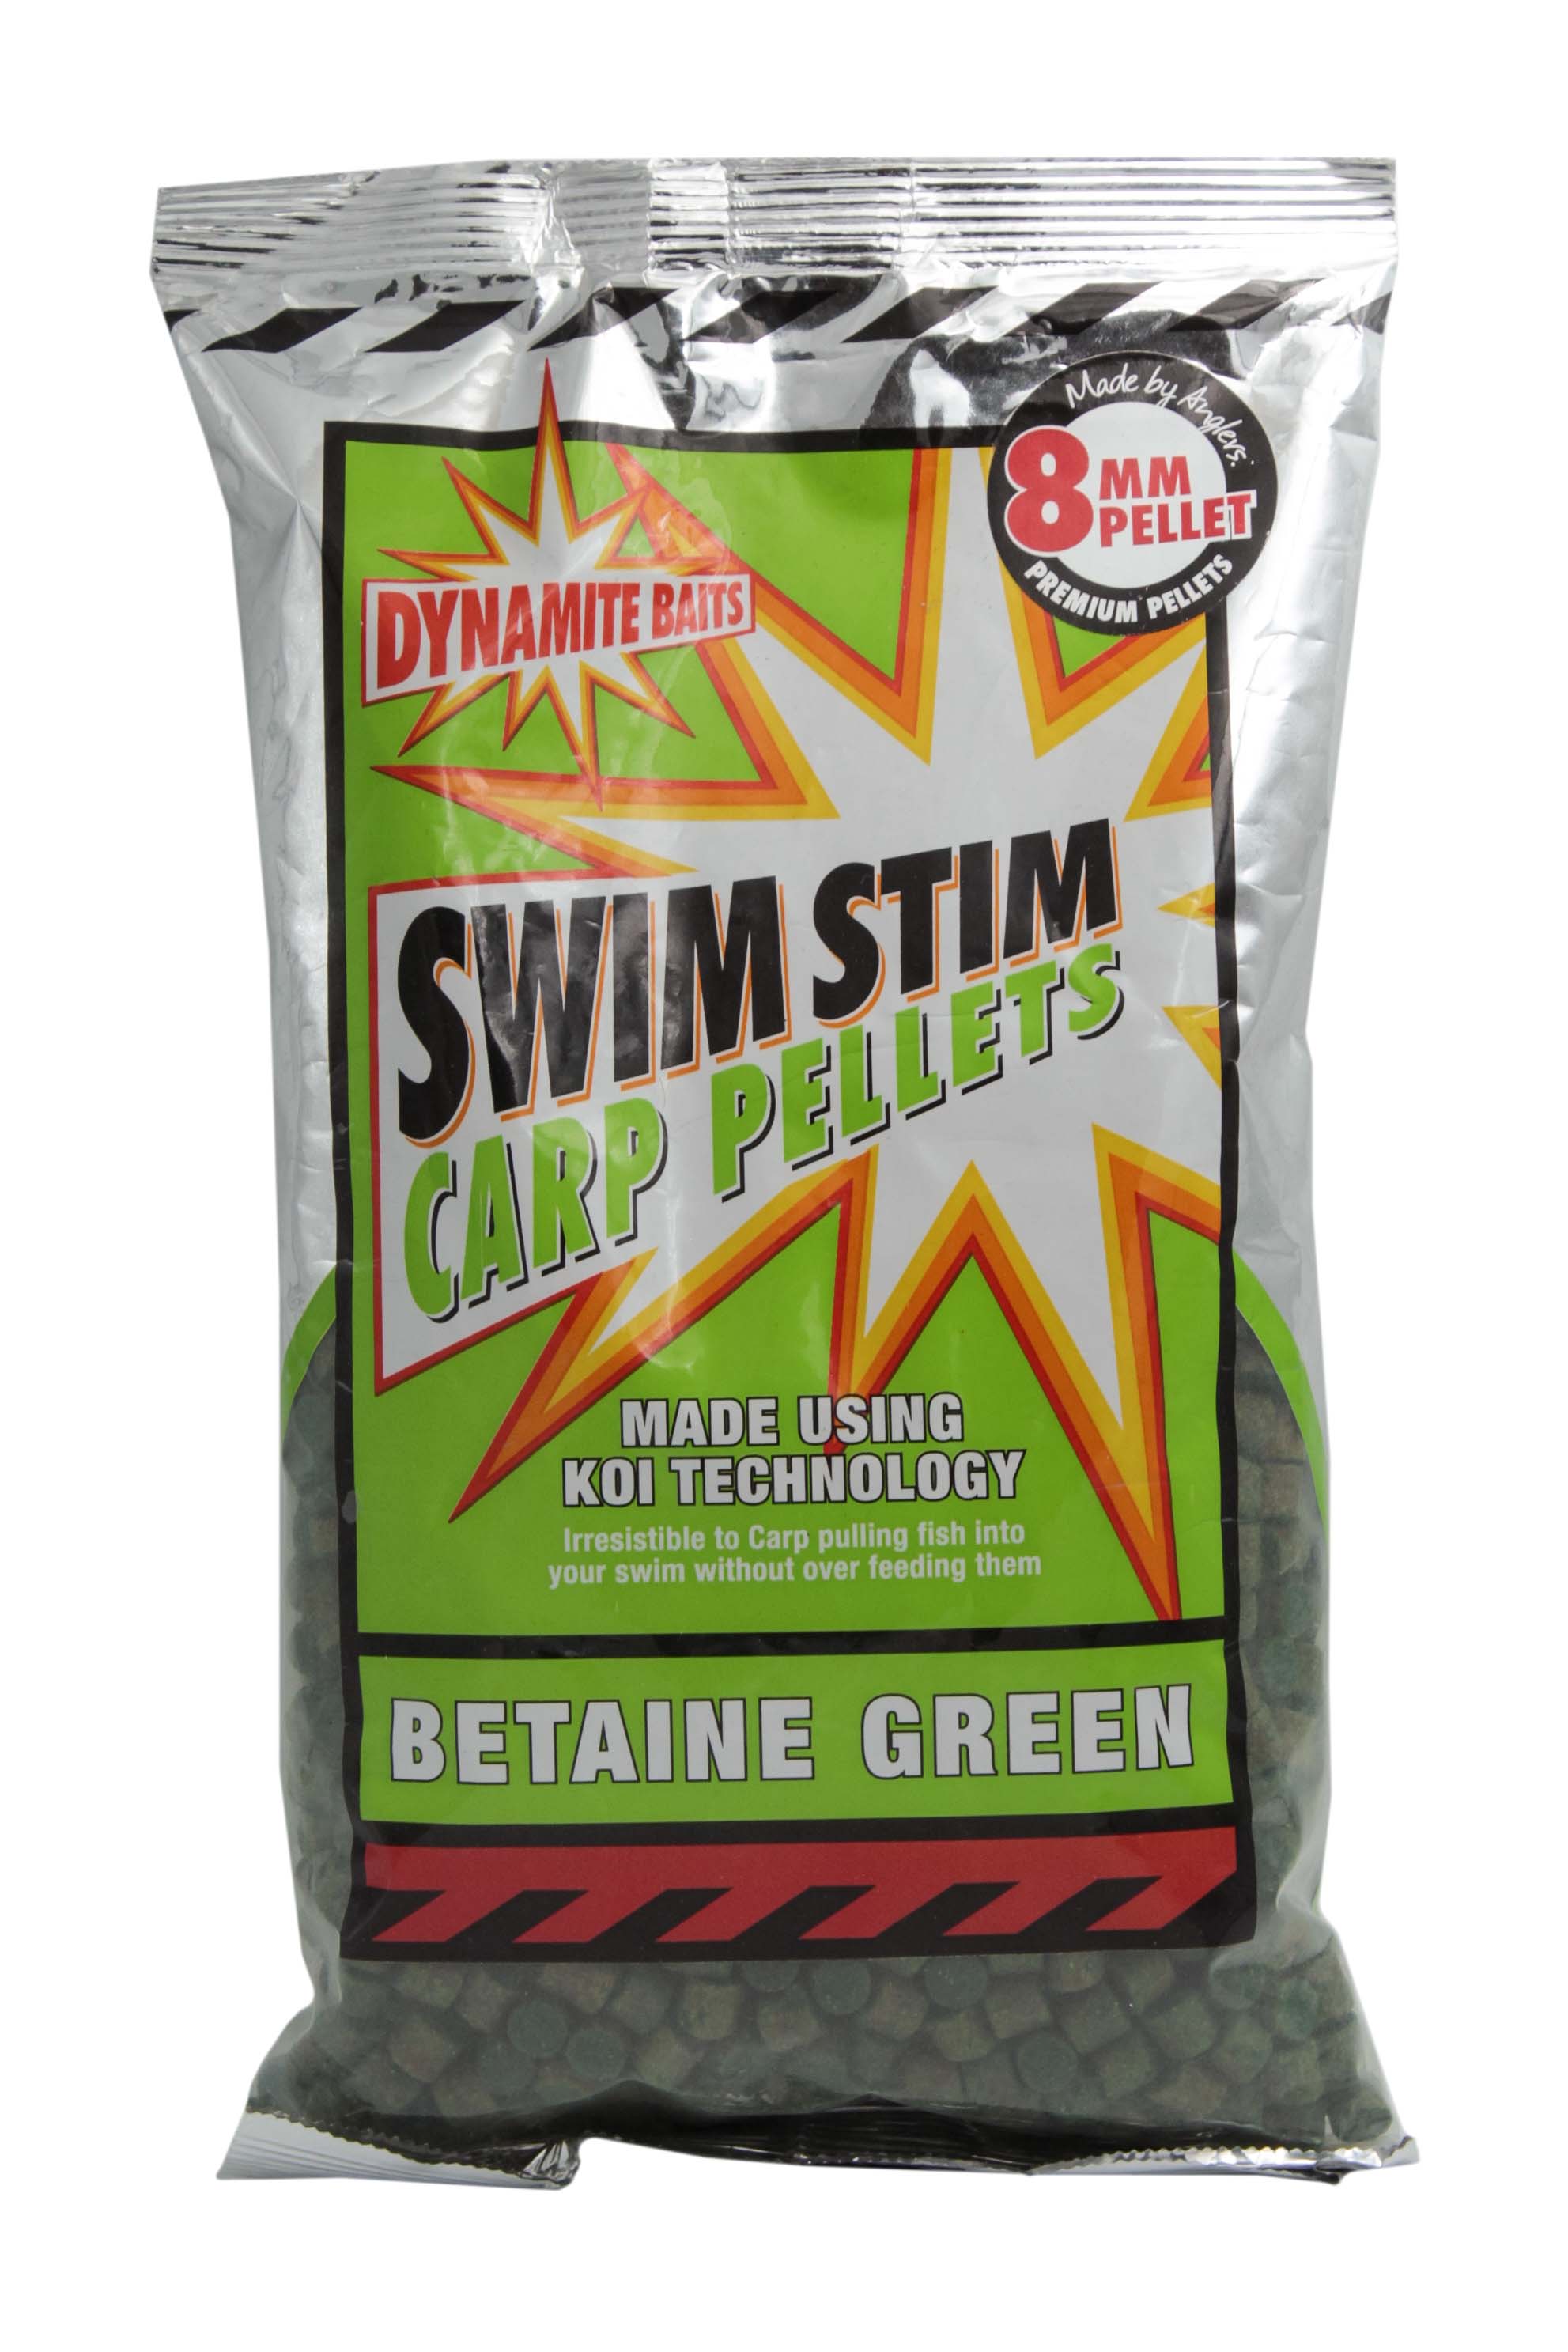 Пеллетс Dynamite Baits Swim stim betaine 8мм 900гр зеленая - фото 1